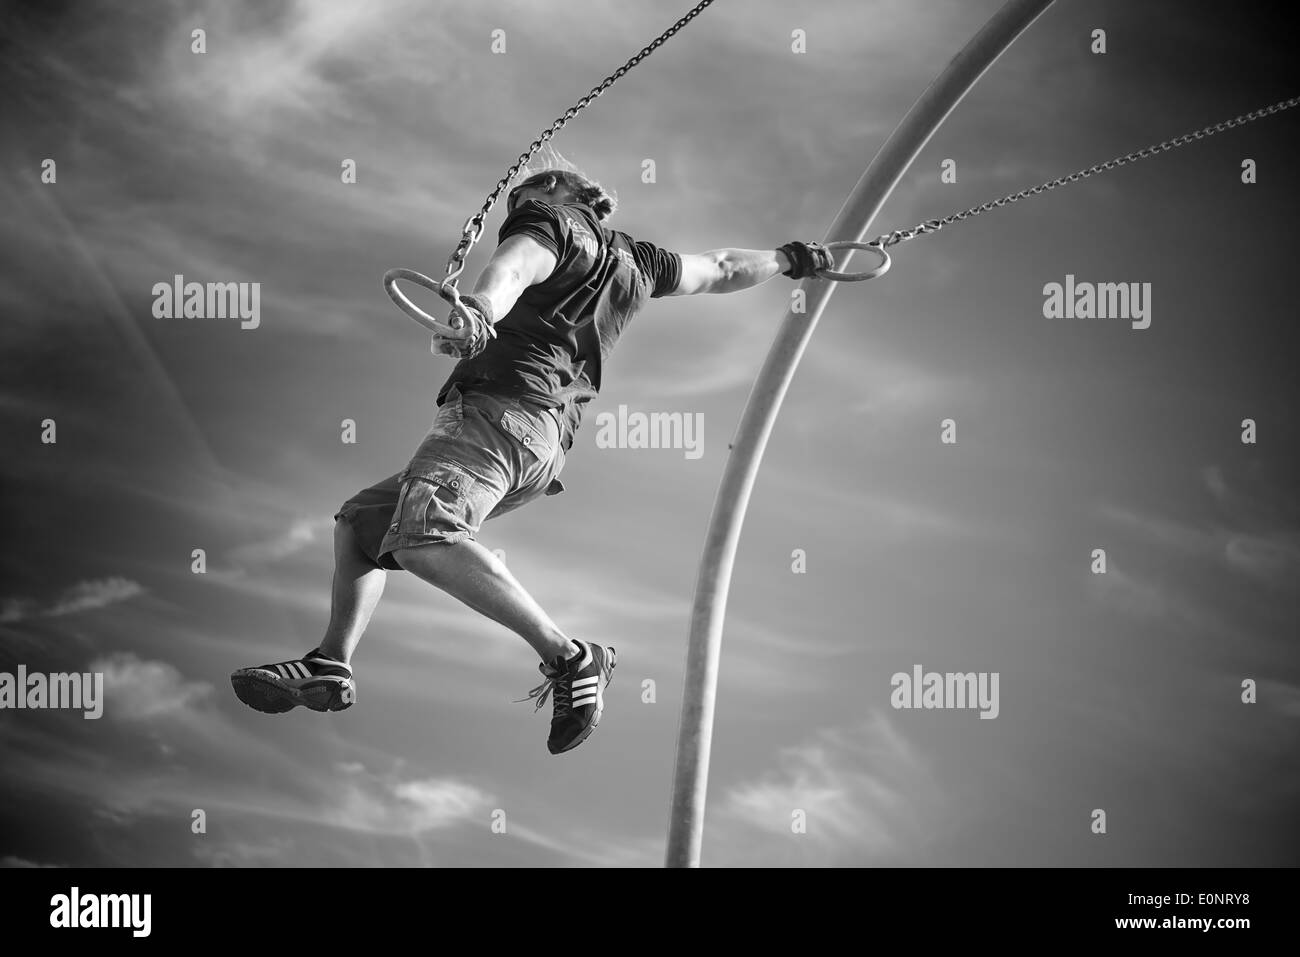 Santa Monica Rings Swinging Sport Athletic Flying Black and White Guy Rings Stock Photo